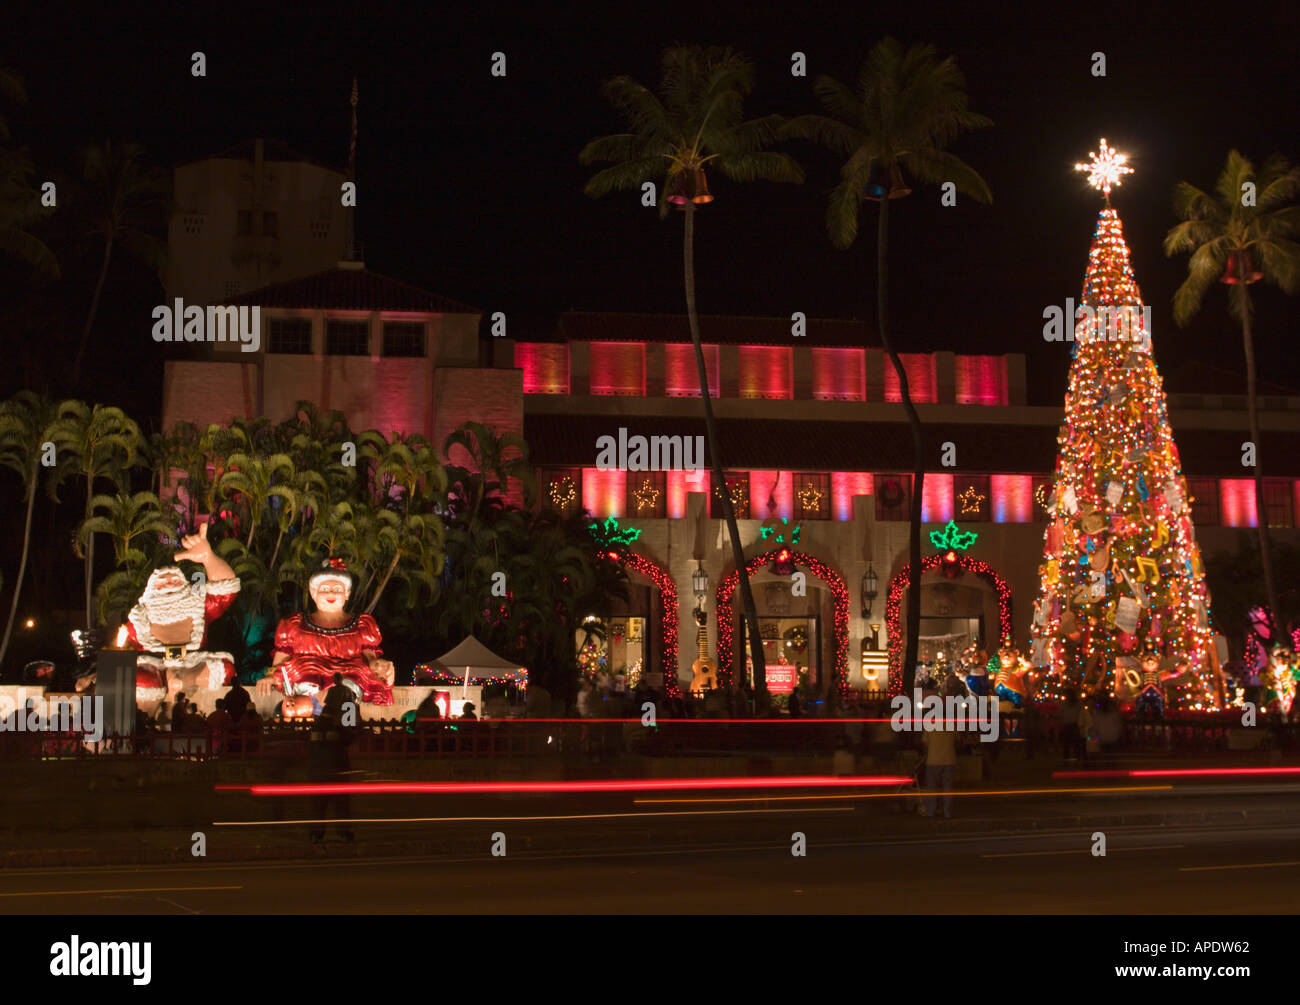 Weihnachten Spielzeug zweistellig nachts beleuchtet & hell erleuchtet Spitzen hoch Stern gekrönt Xmas Baum Honolulu Insel Oahu Hawaii Stockfoto